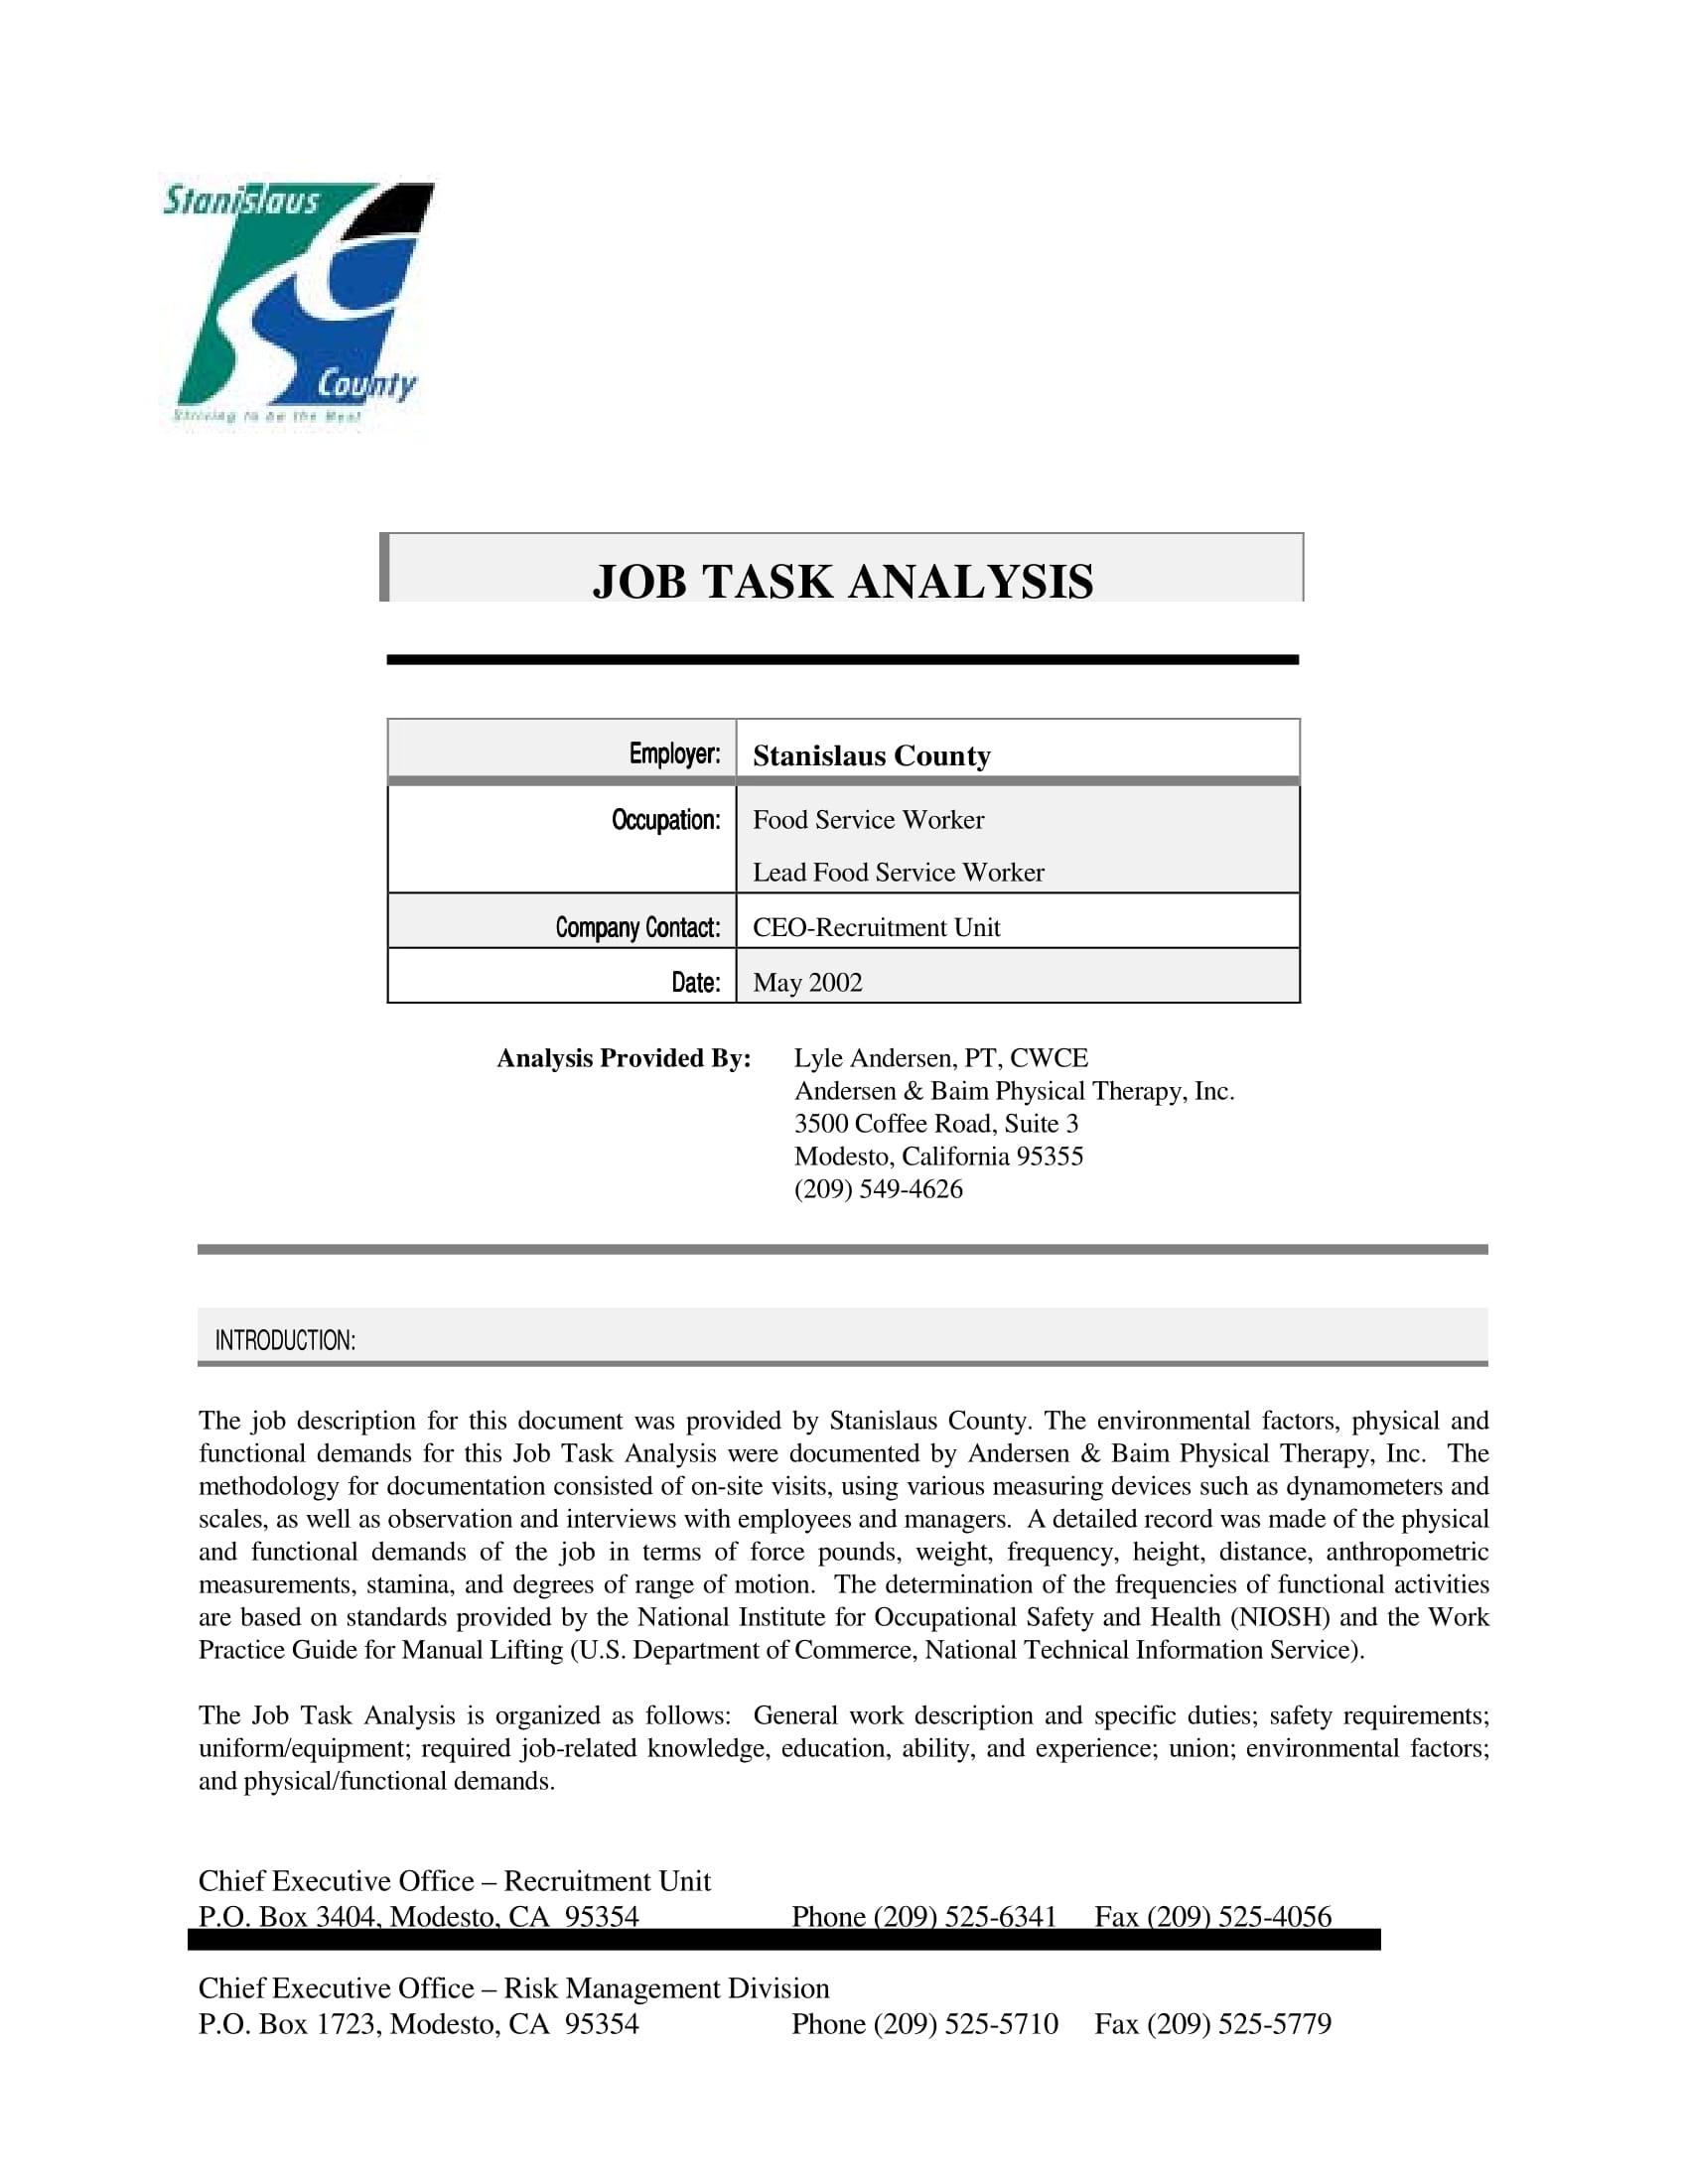 job task analysis example 01